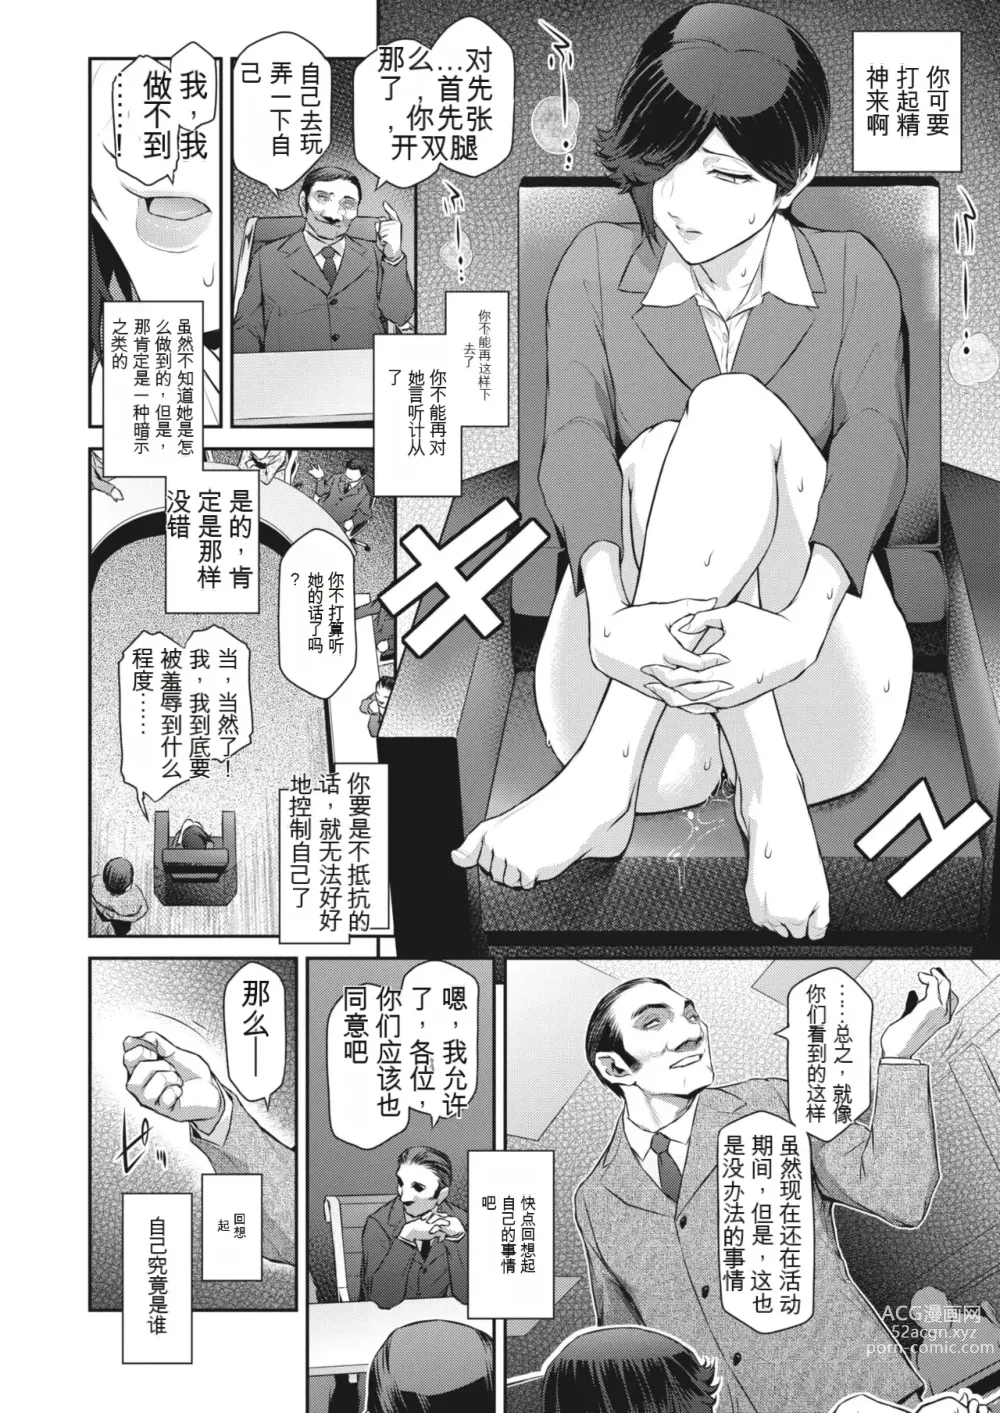 Page 98 of manga Affinity Ch.1-5